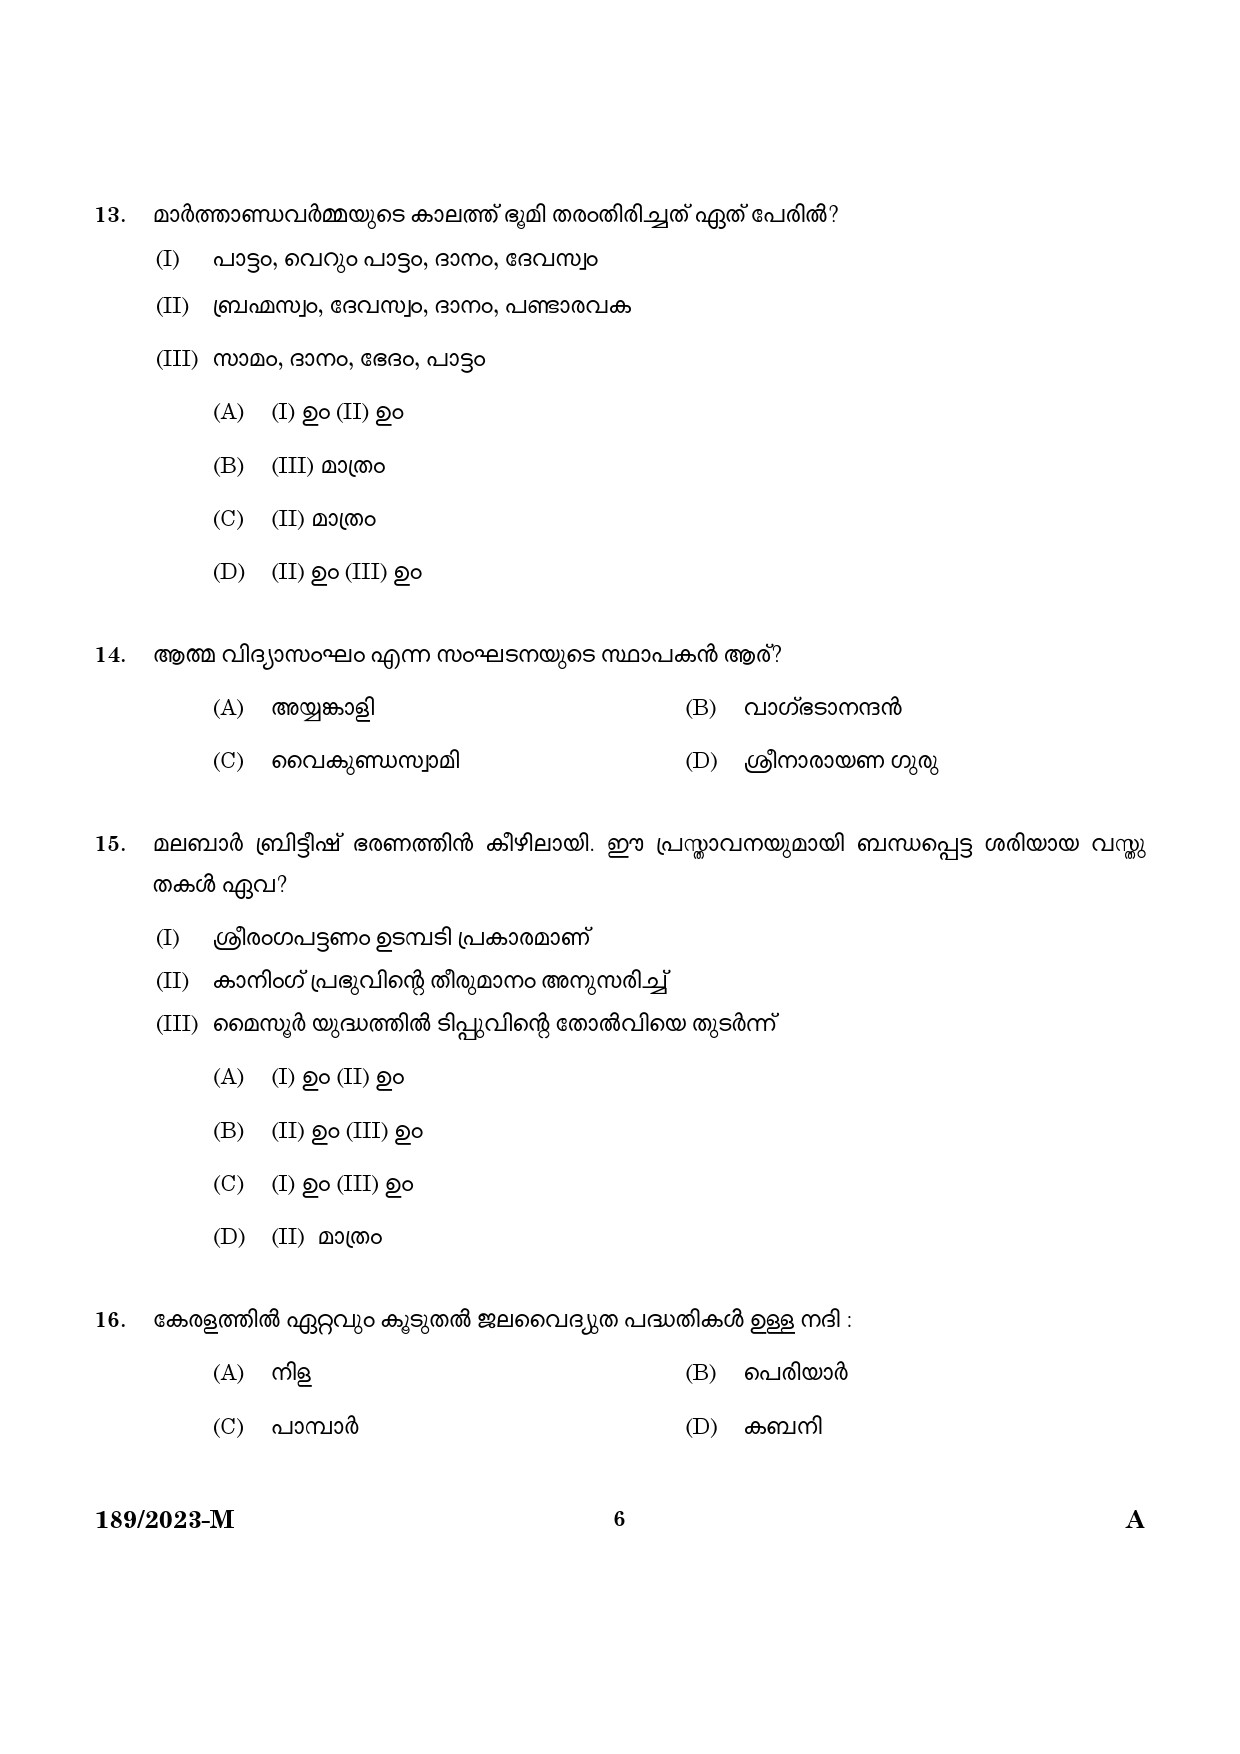 KPSC LGS Malayalam Exam 2023 Code 1892023 M 4